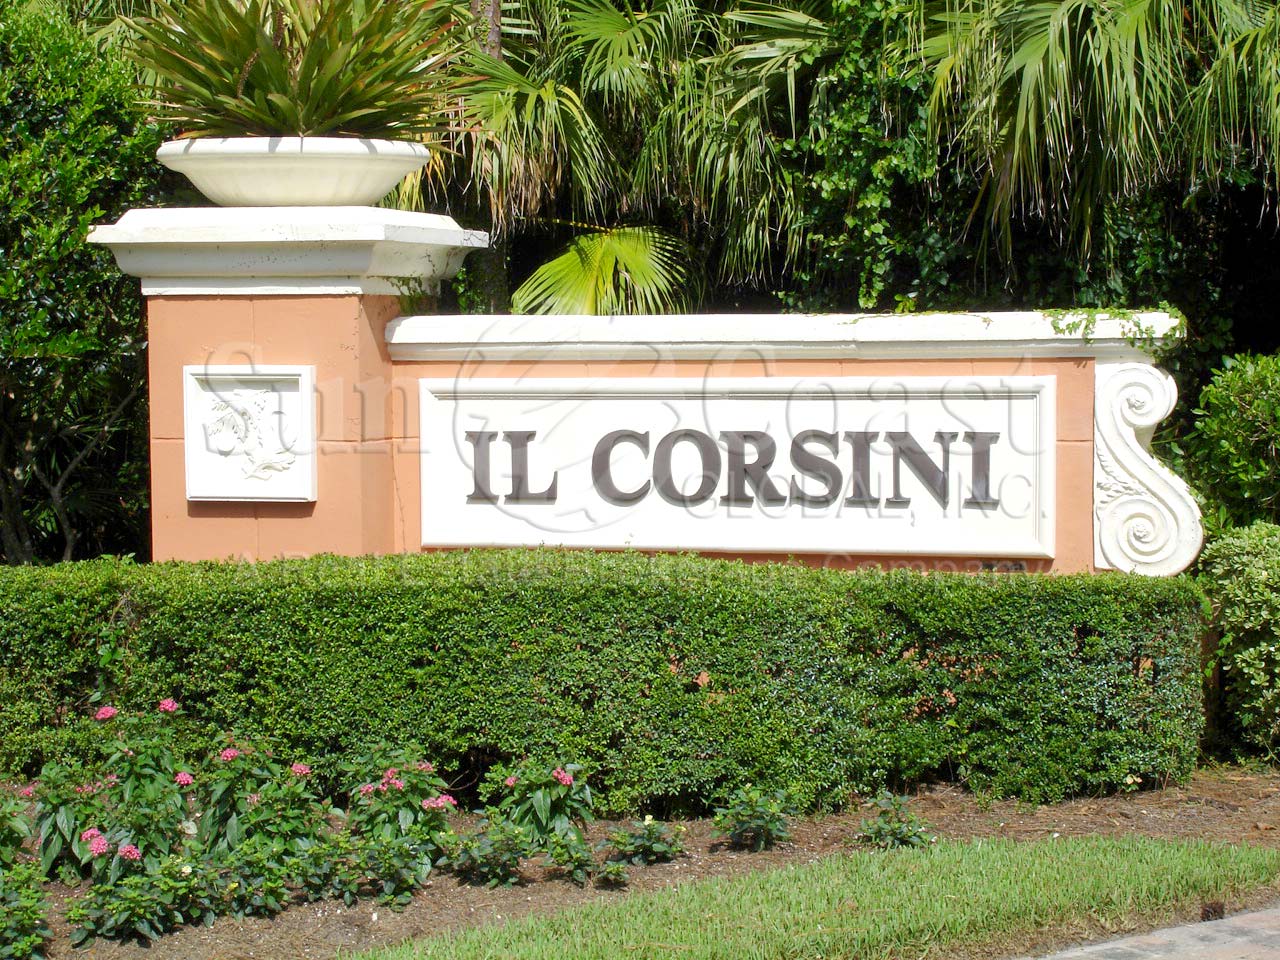 Il Corsini Signage